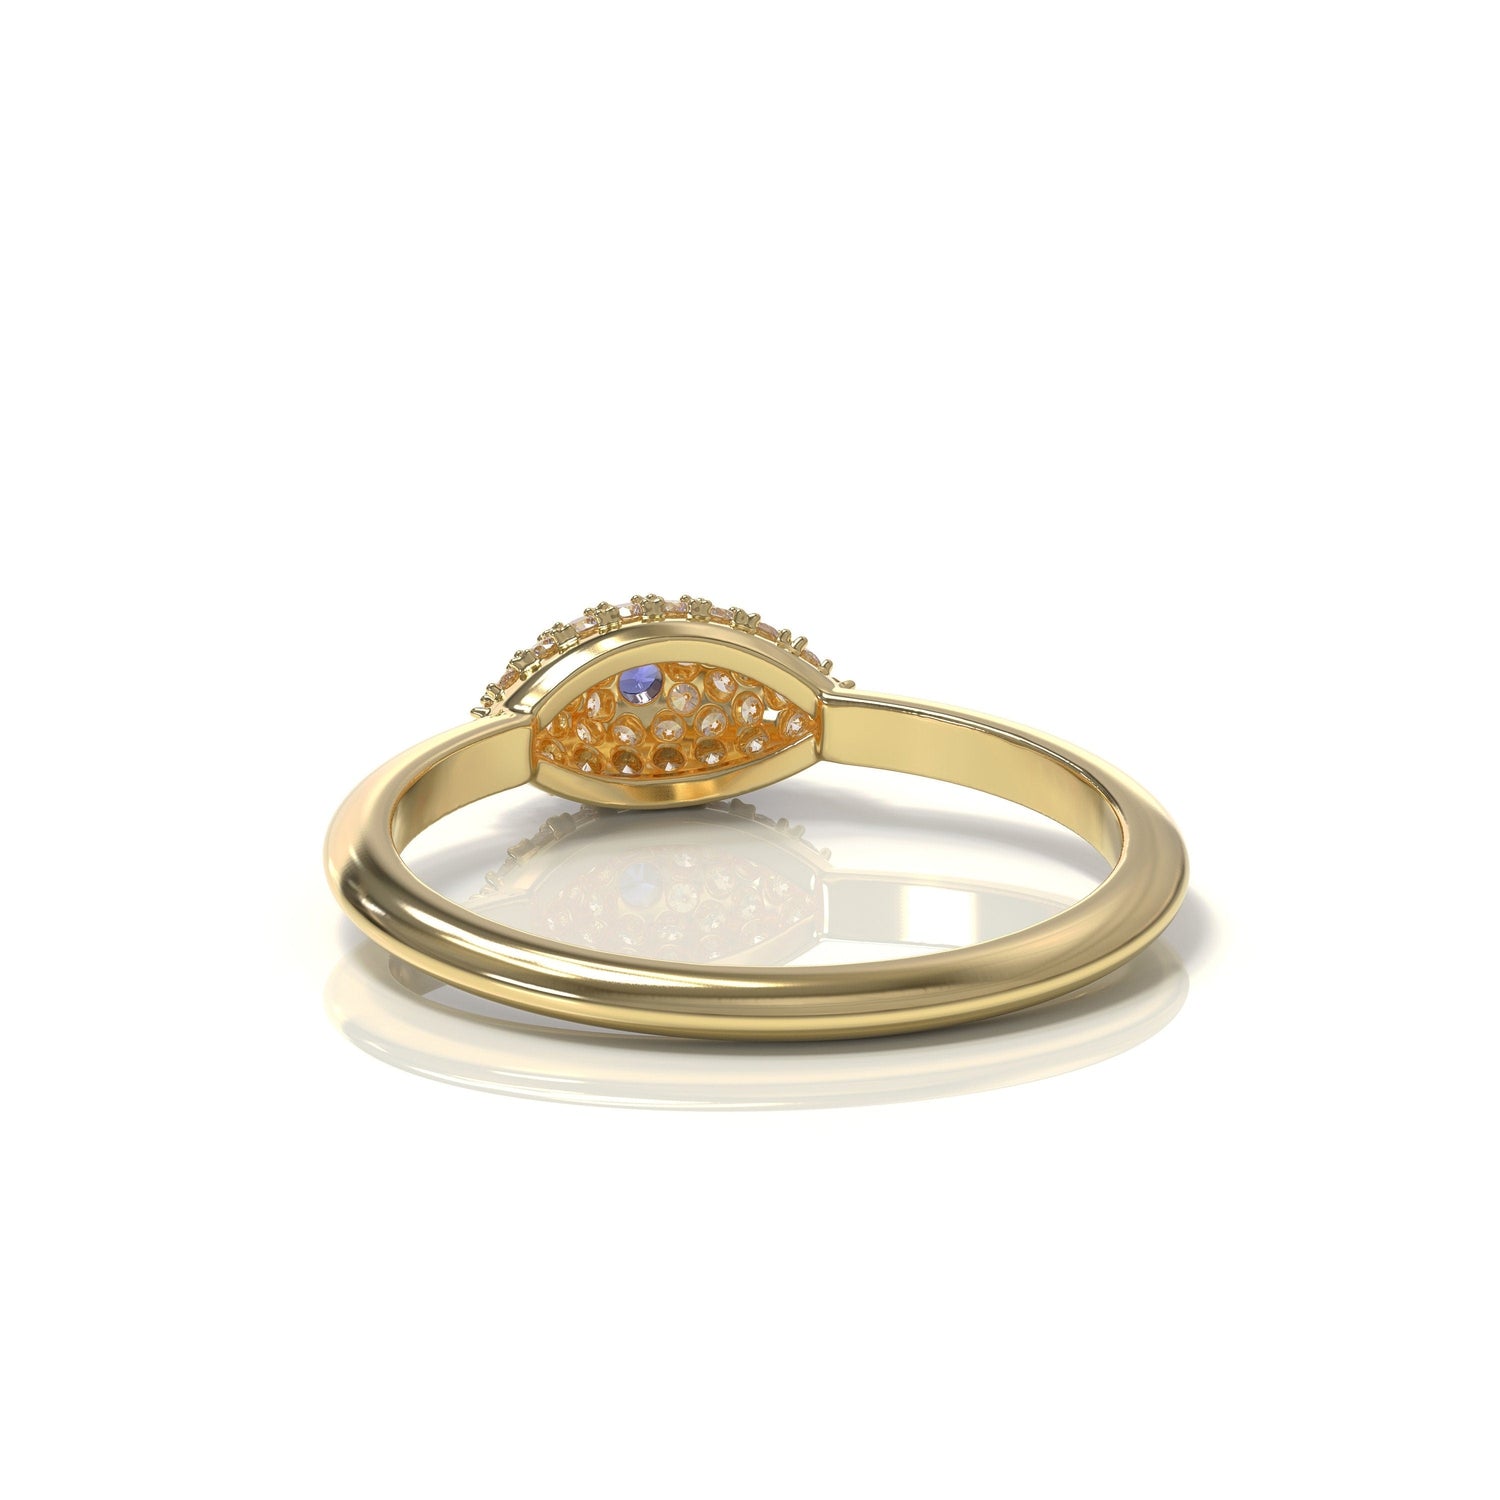 Gold Evil Eye Ring / Diamond Gold Evil Eye Ring / Minimalist Ring / Evil Eye Jewelry / 14k Gold Evil Eye Ring / Cyber Monday Sale